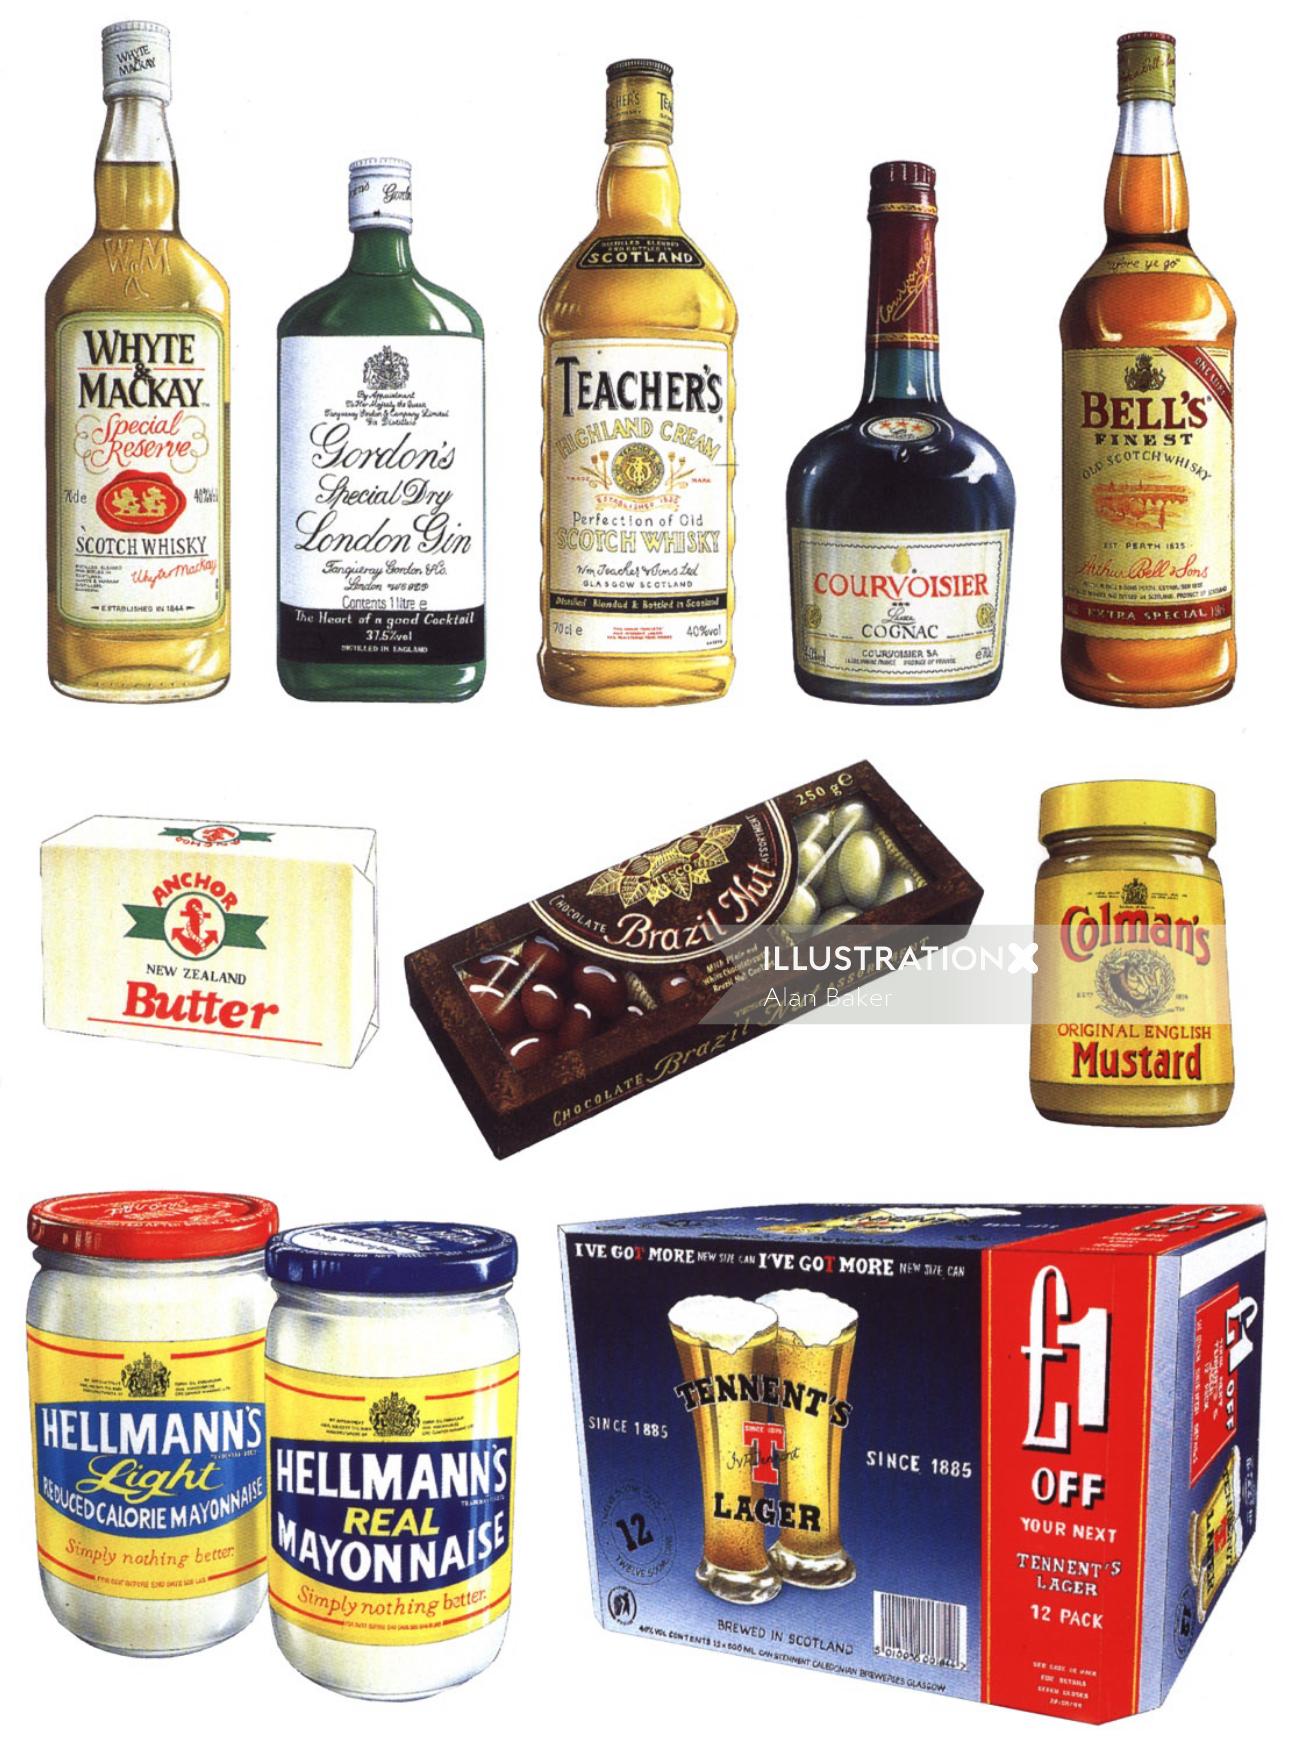 Whisky,Chocolate,Mustard illustration by Alan Baker